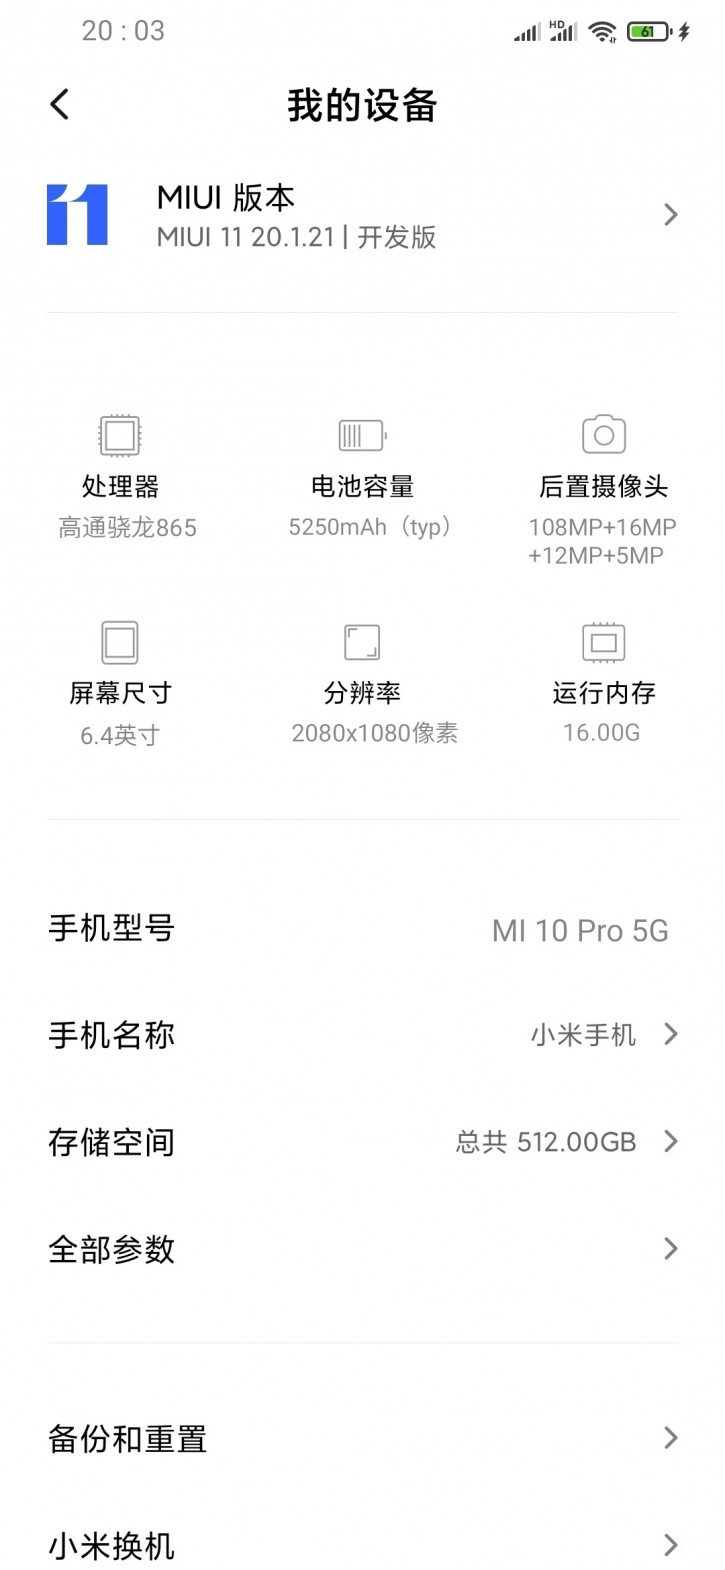 MIUI 11  Xiaomi Mi 10 Pro 5G   : ?